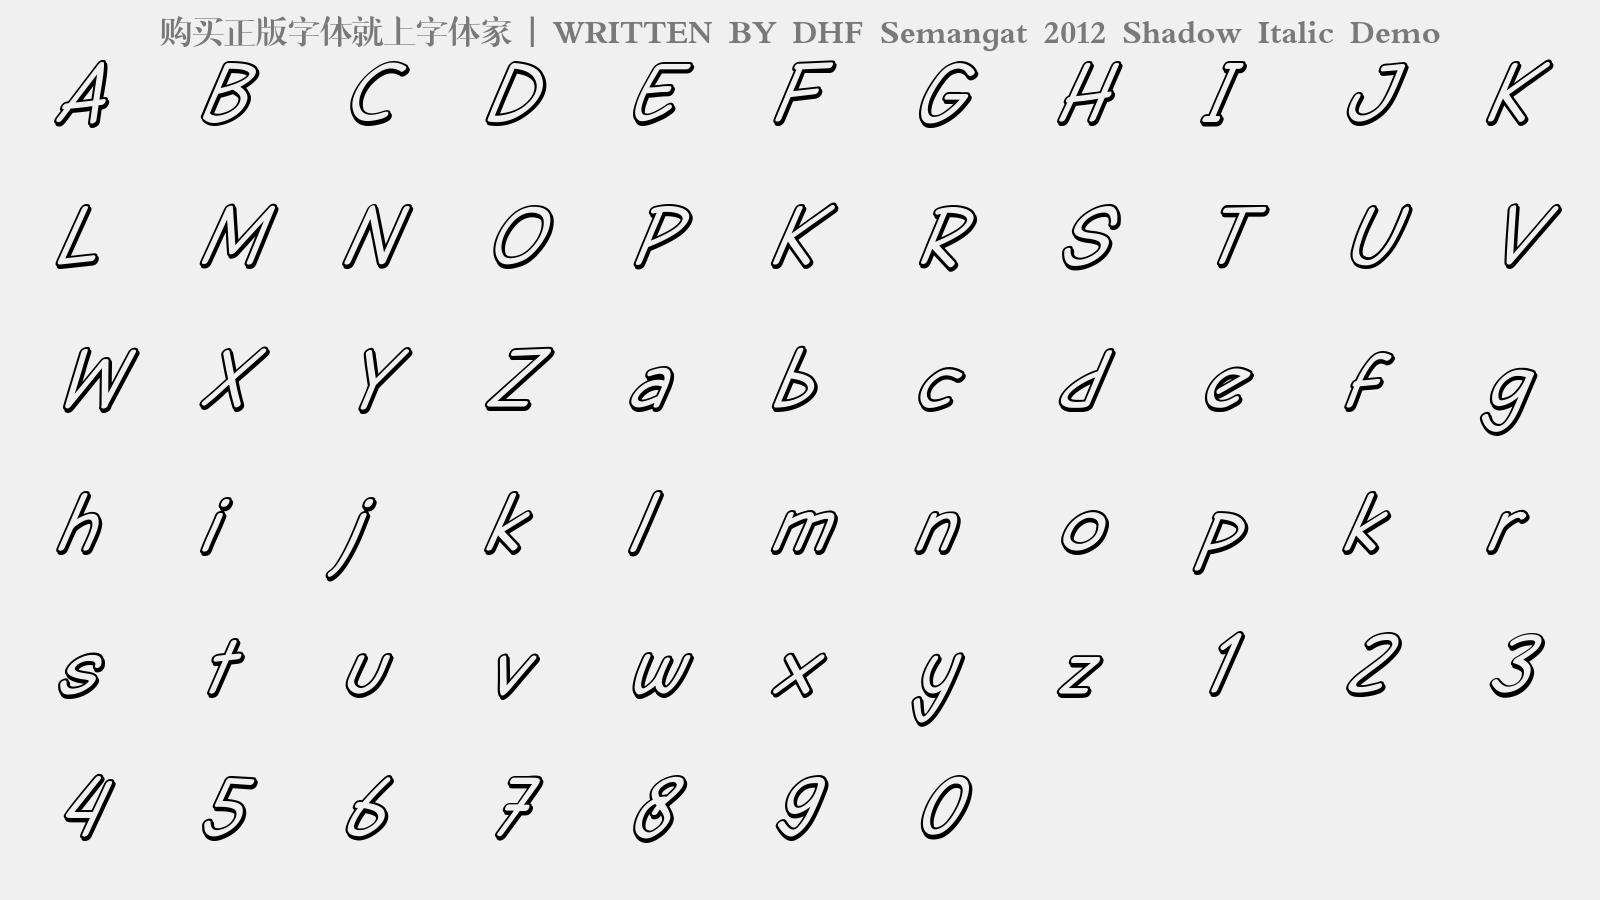 DHF Semangat 2012 Shadow Italic Demo - 大写字母/小写字母/数字